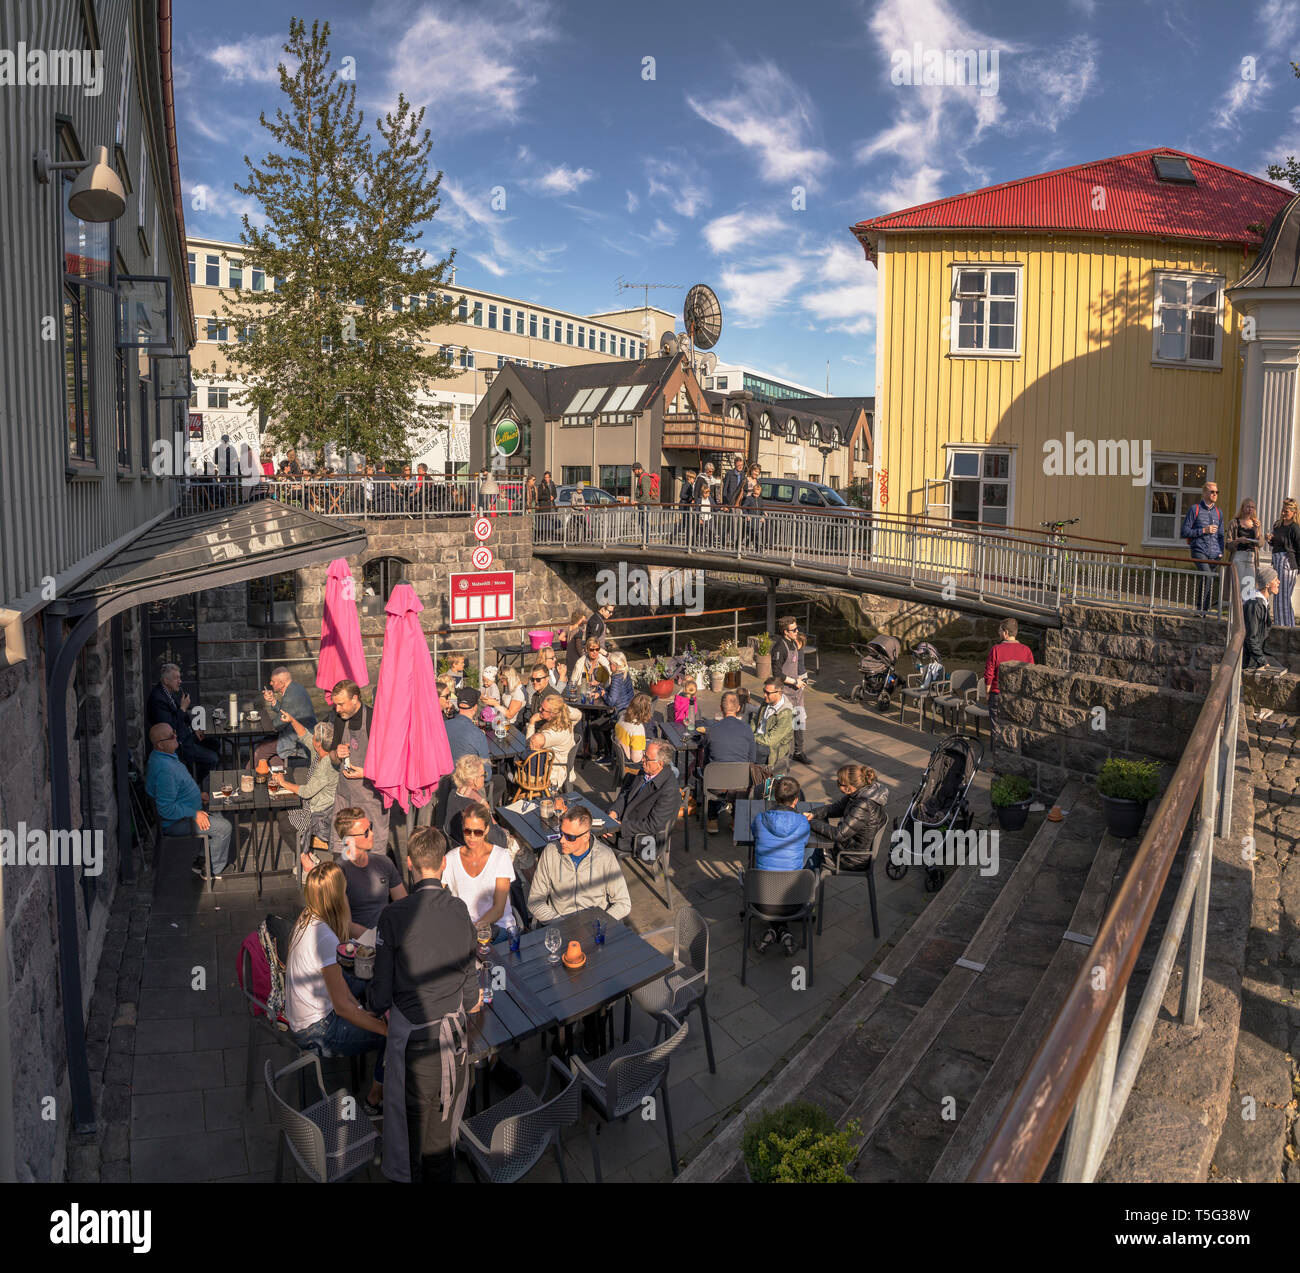 Outdoors Cafe, Cultural Day, Summer Festival, Reykjavik, Iceland Stock Photo